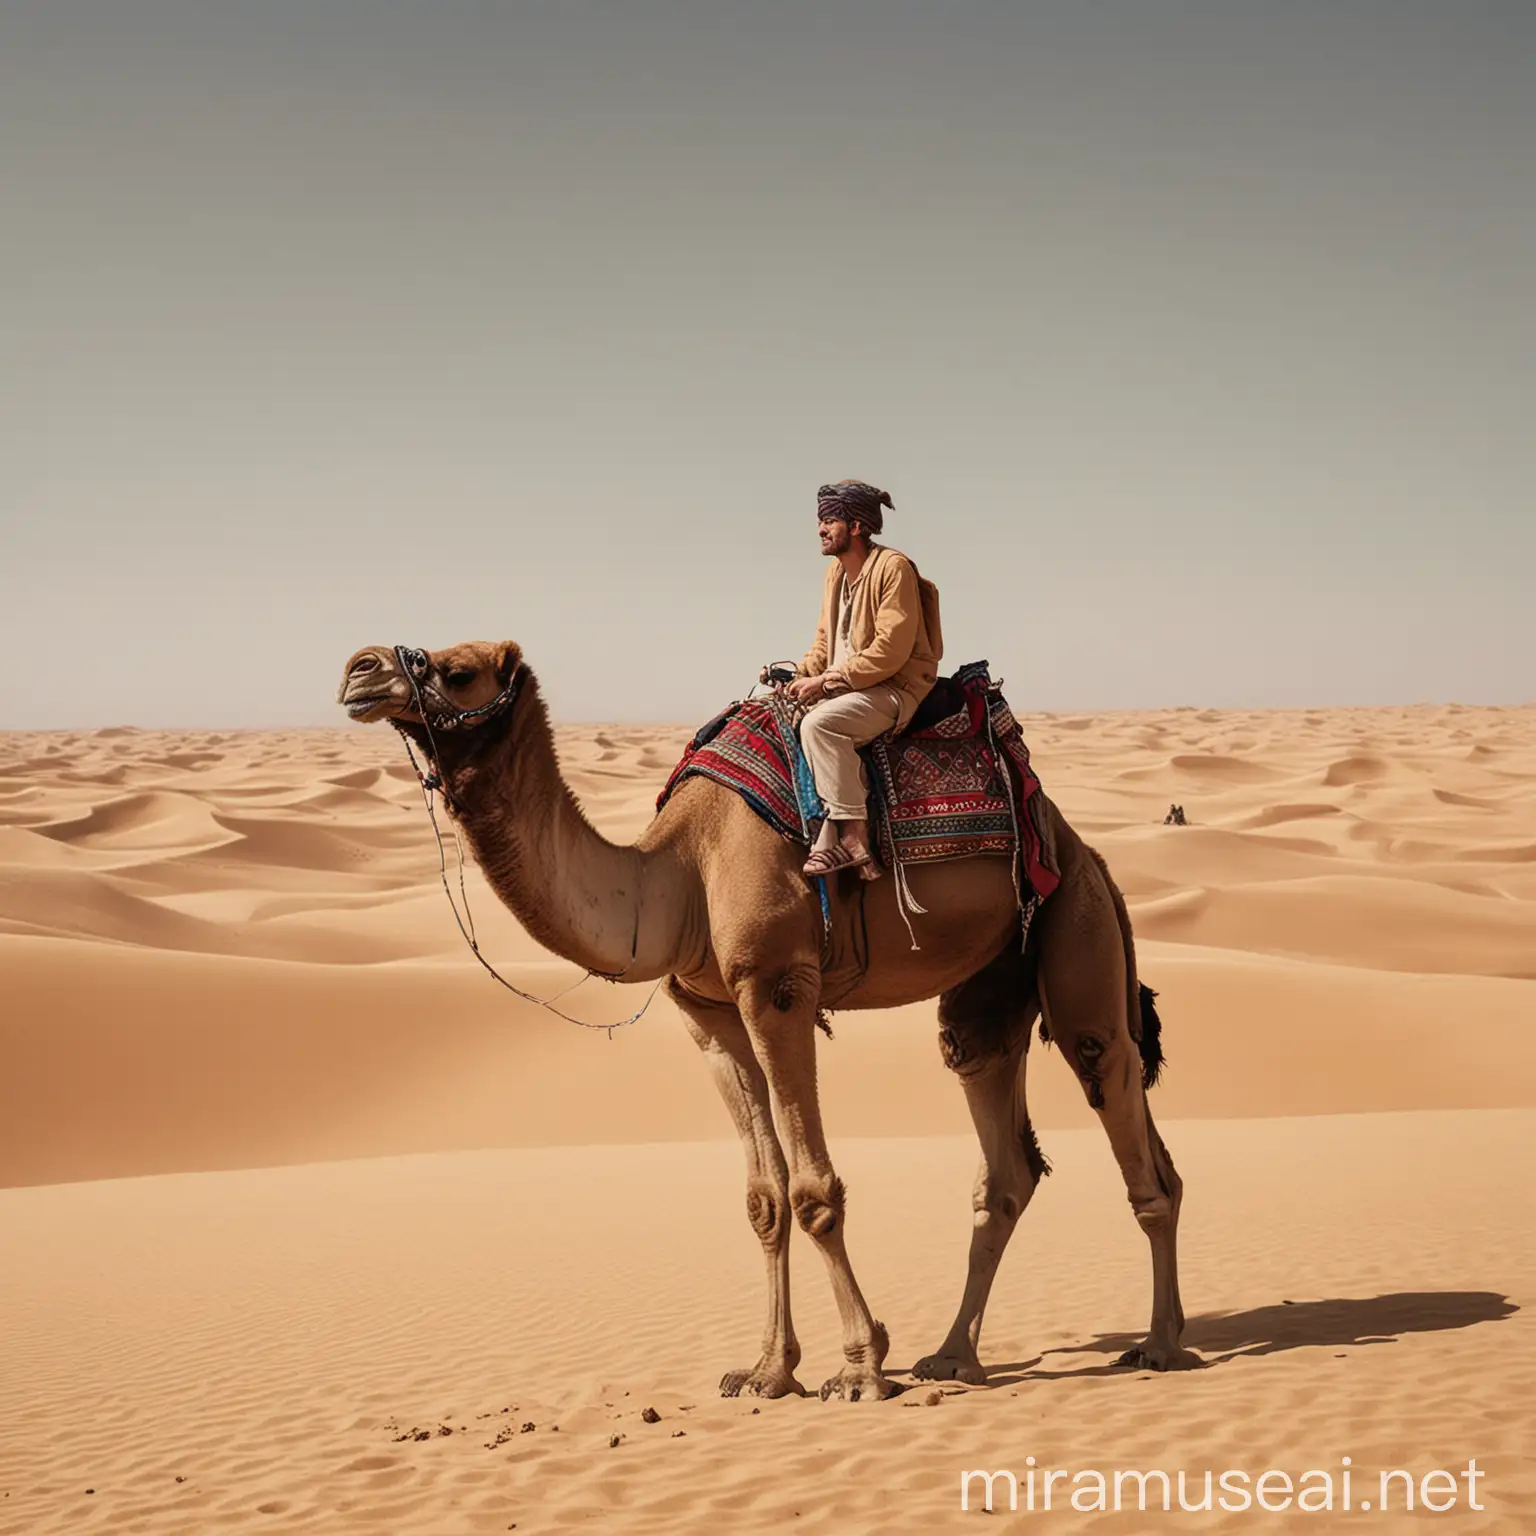 Desert Camel Riding for English Readers Adventure in Arid Lands